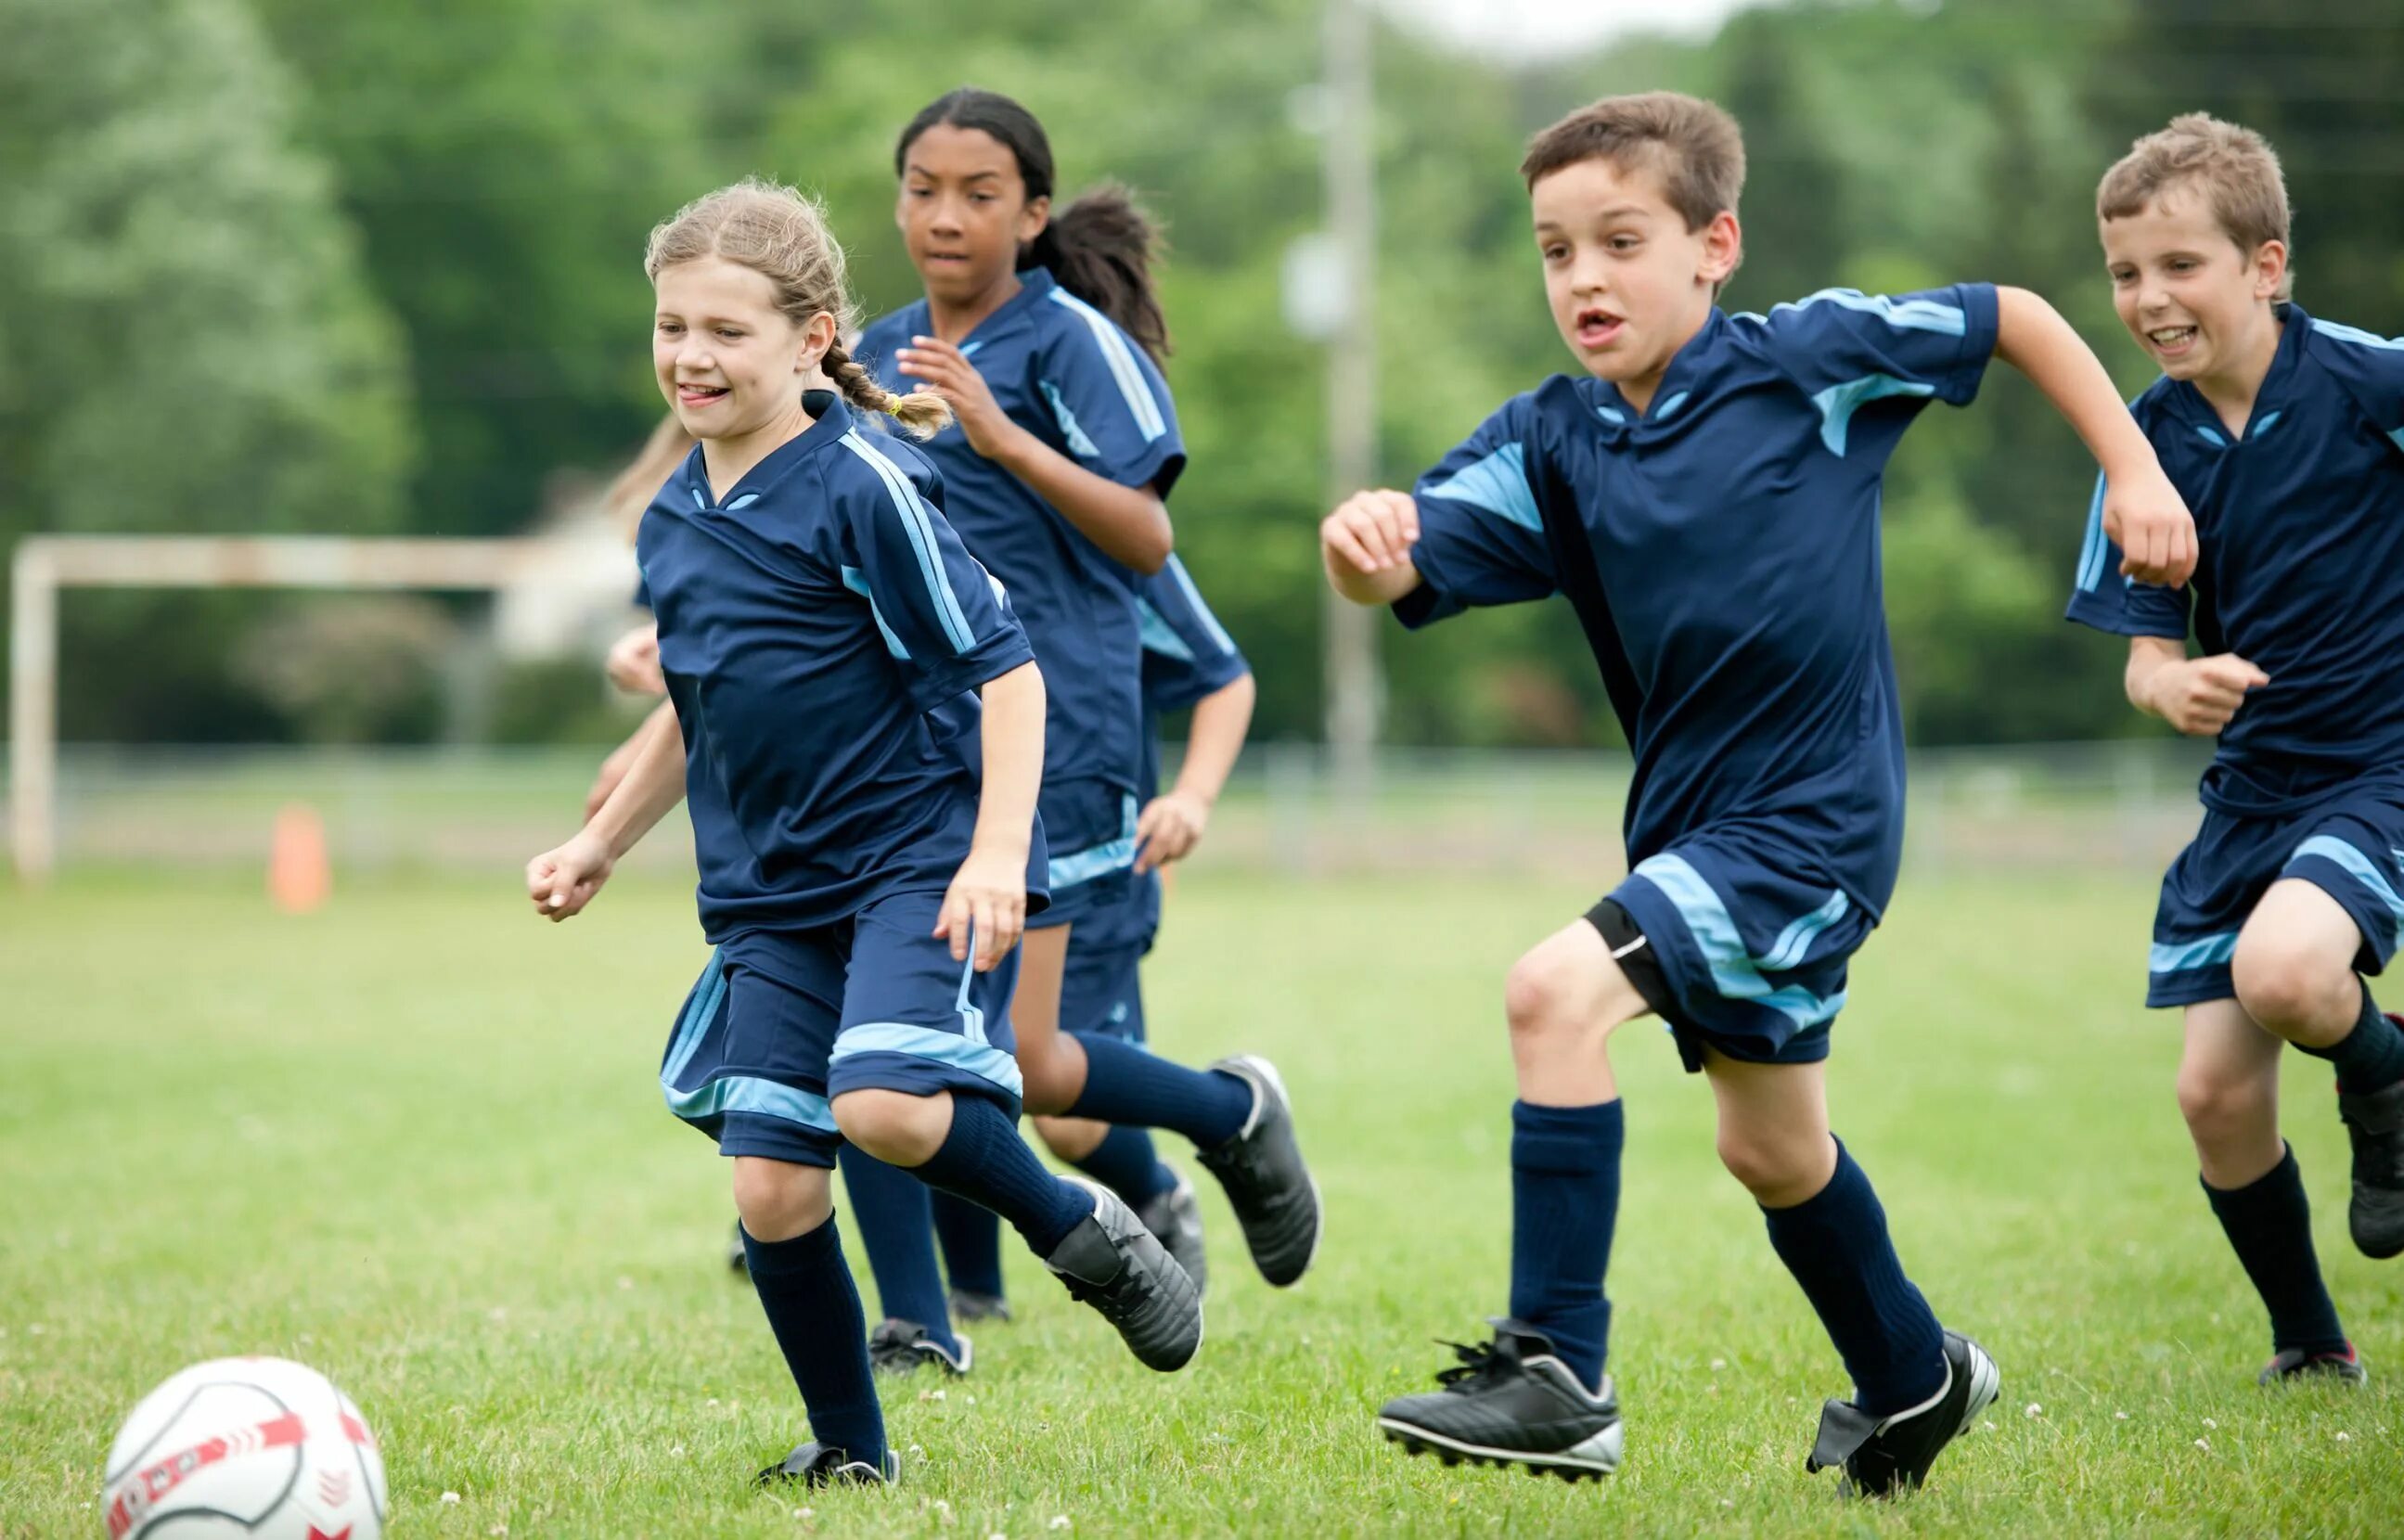 We can players. Футбол дети. Дети играющие в футбол. Спорт футбол дети. Футбол для школьников.